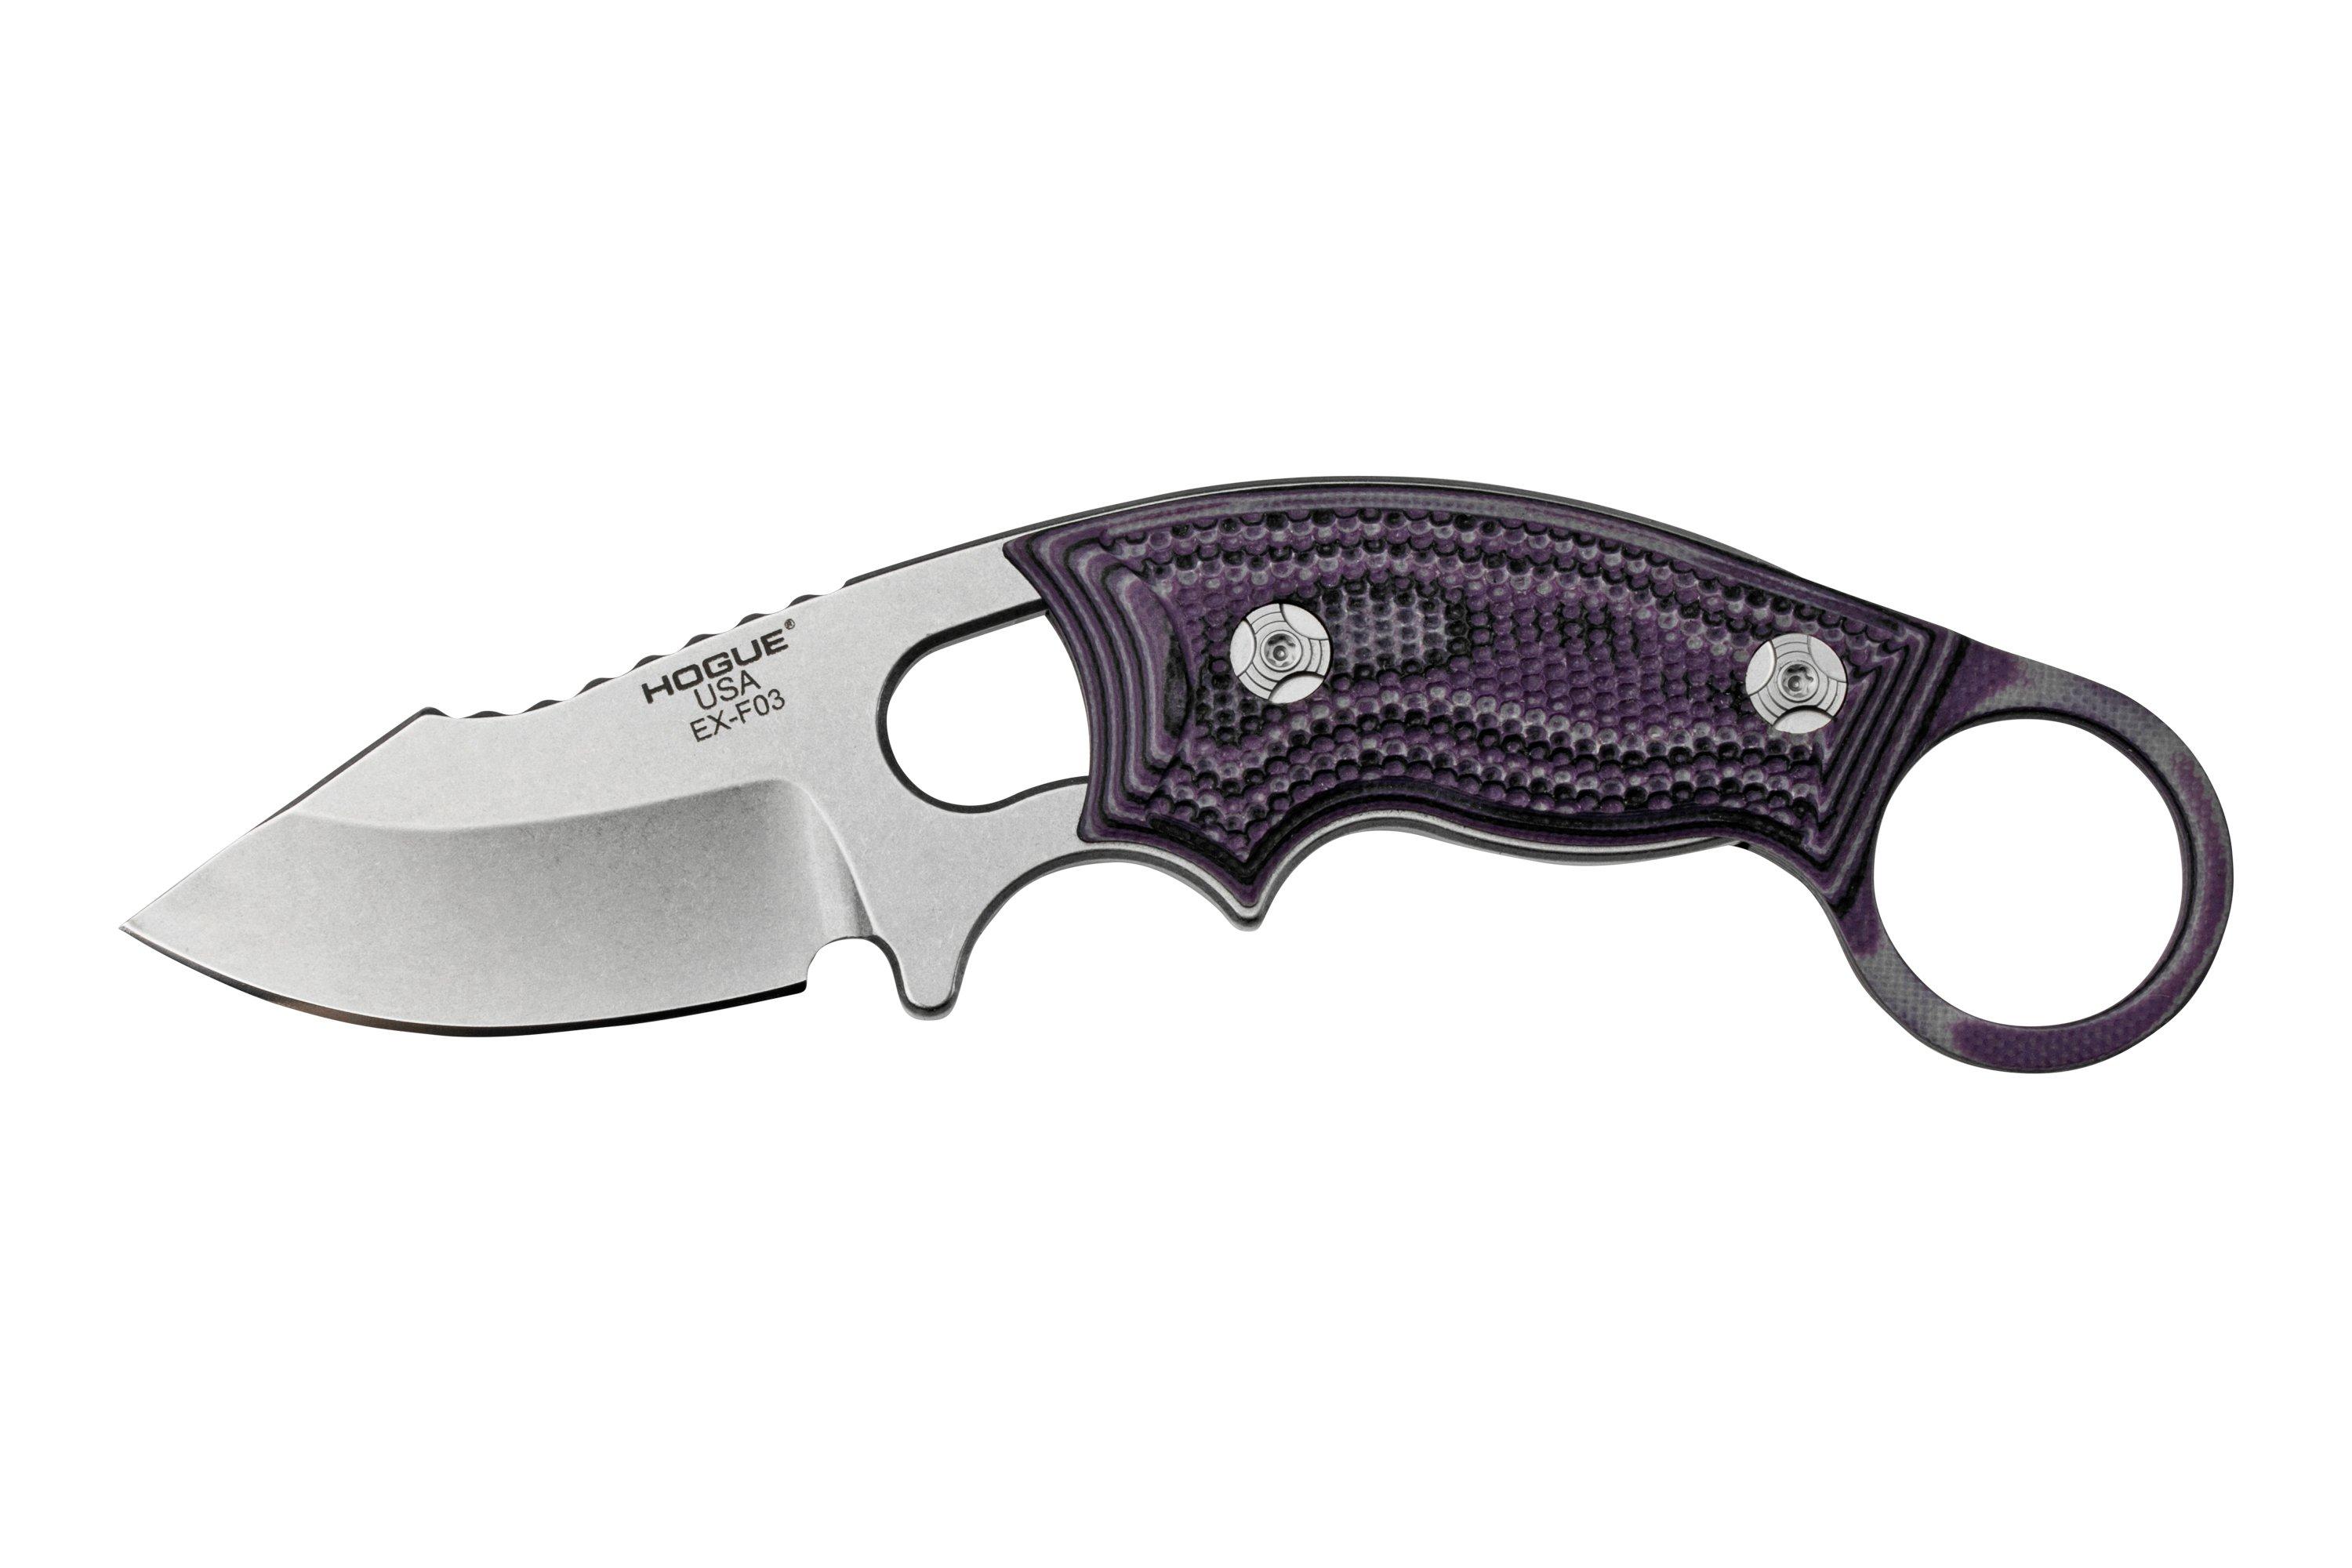 Hogue EX-F03 G-Mascus Purple, 35338 neck knife | Advantageously 